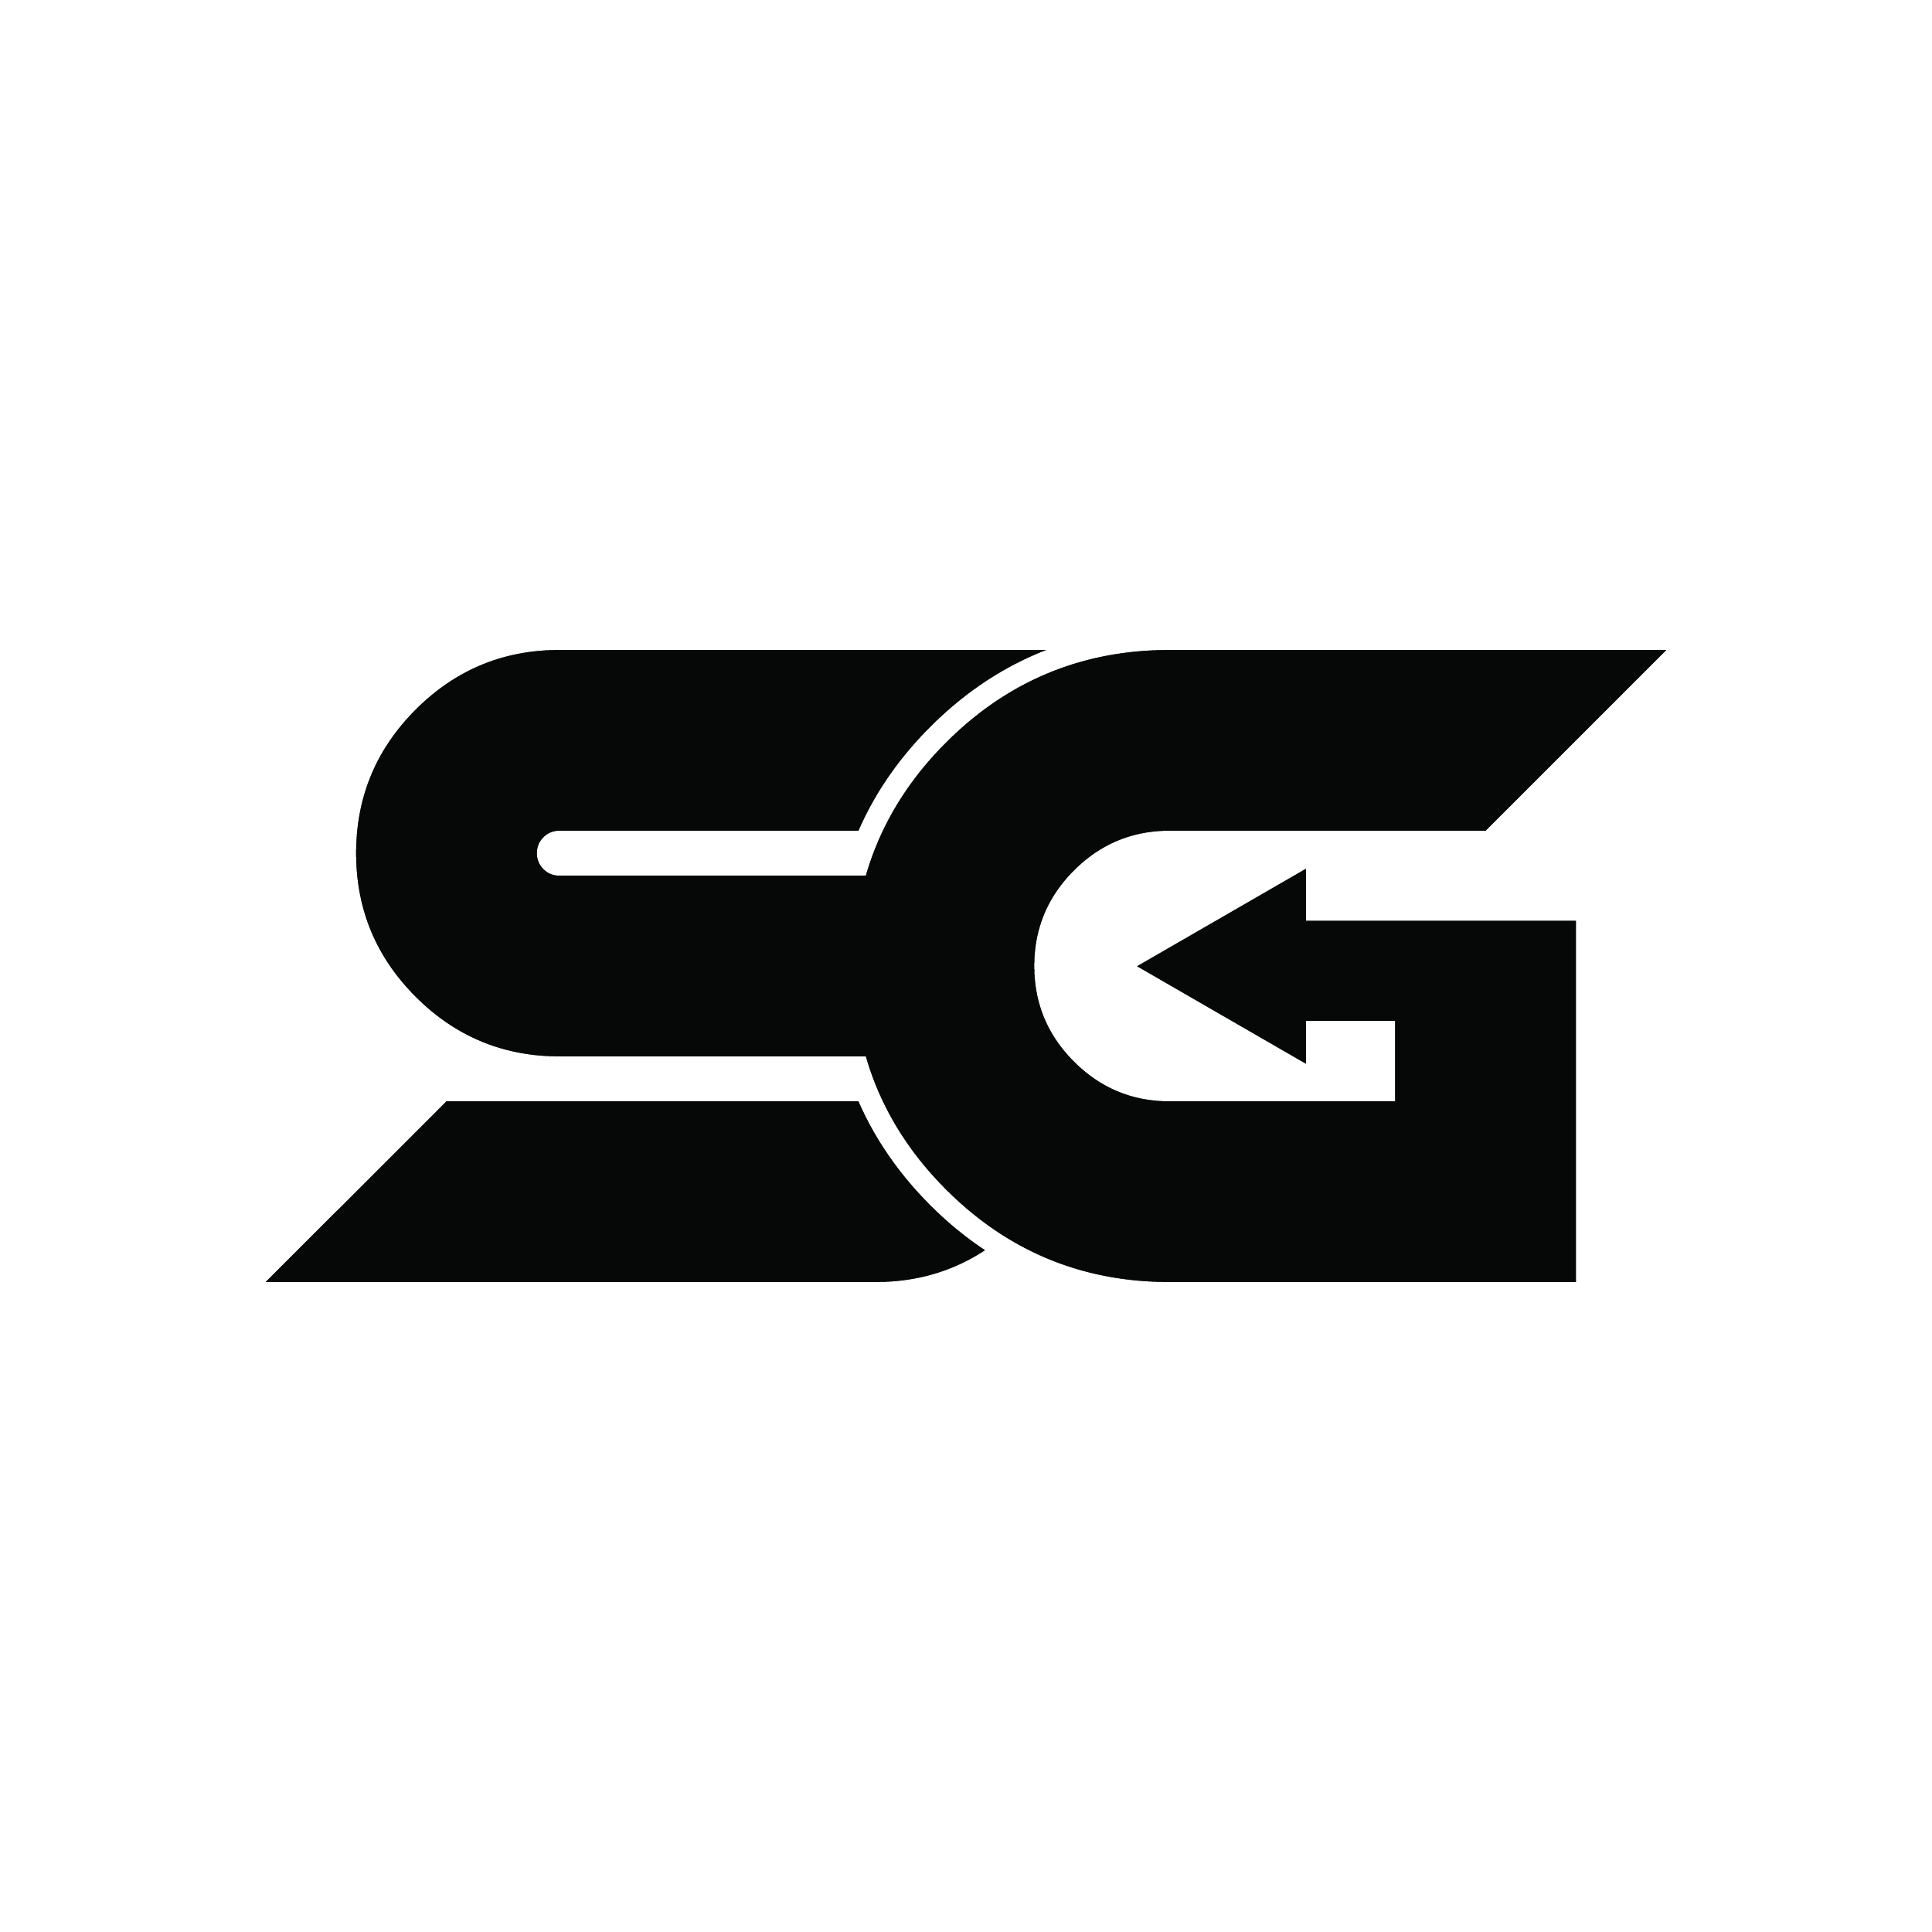 SG logo preview image.